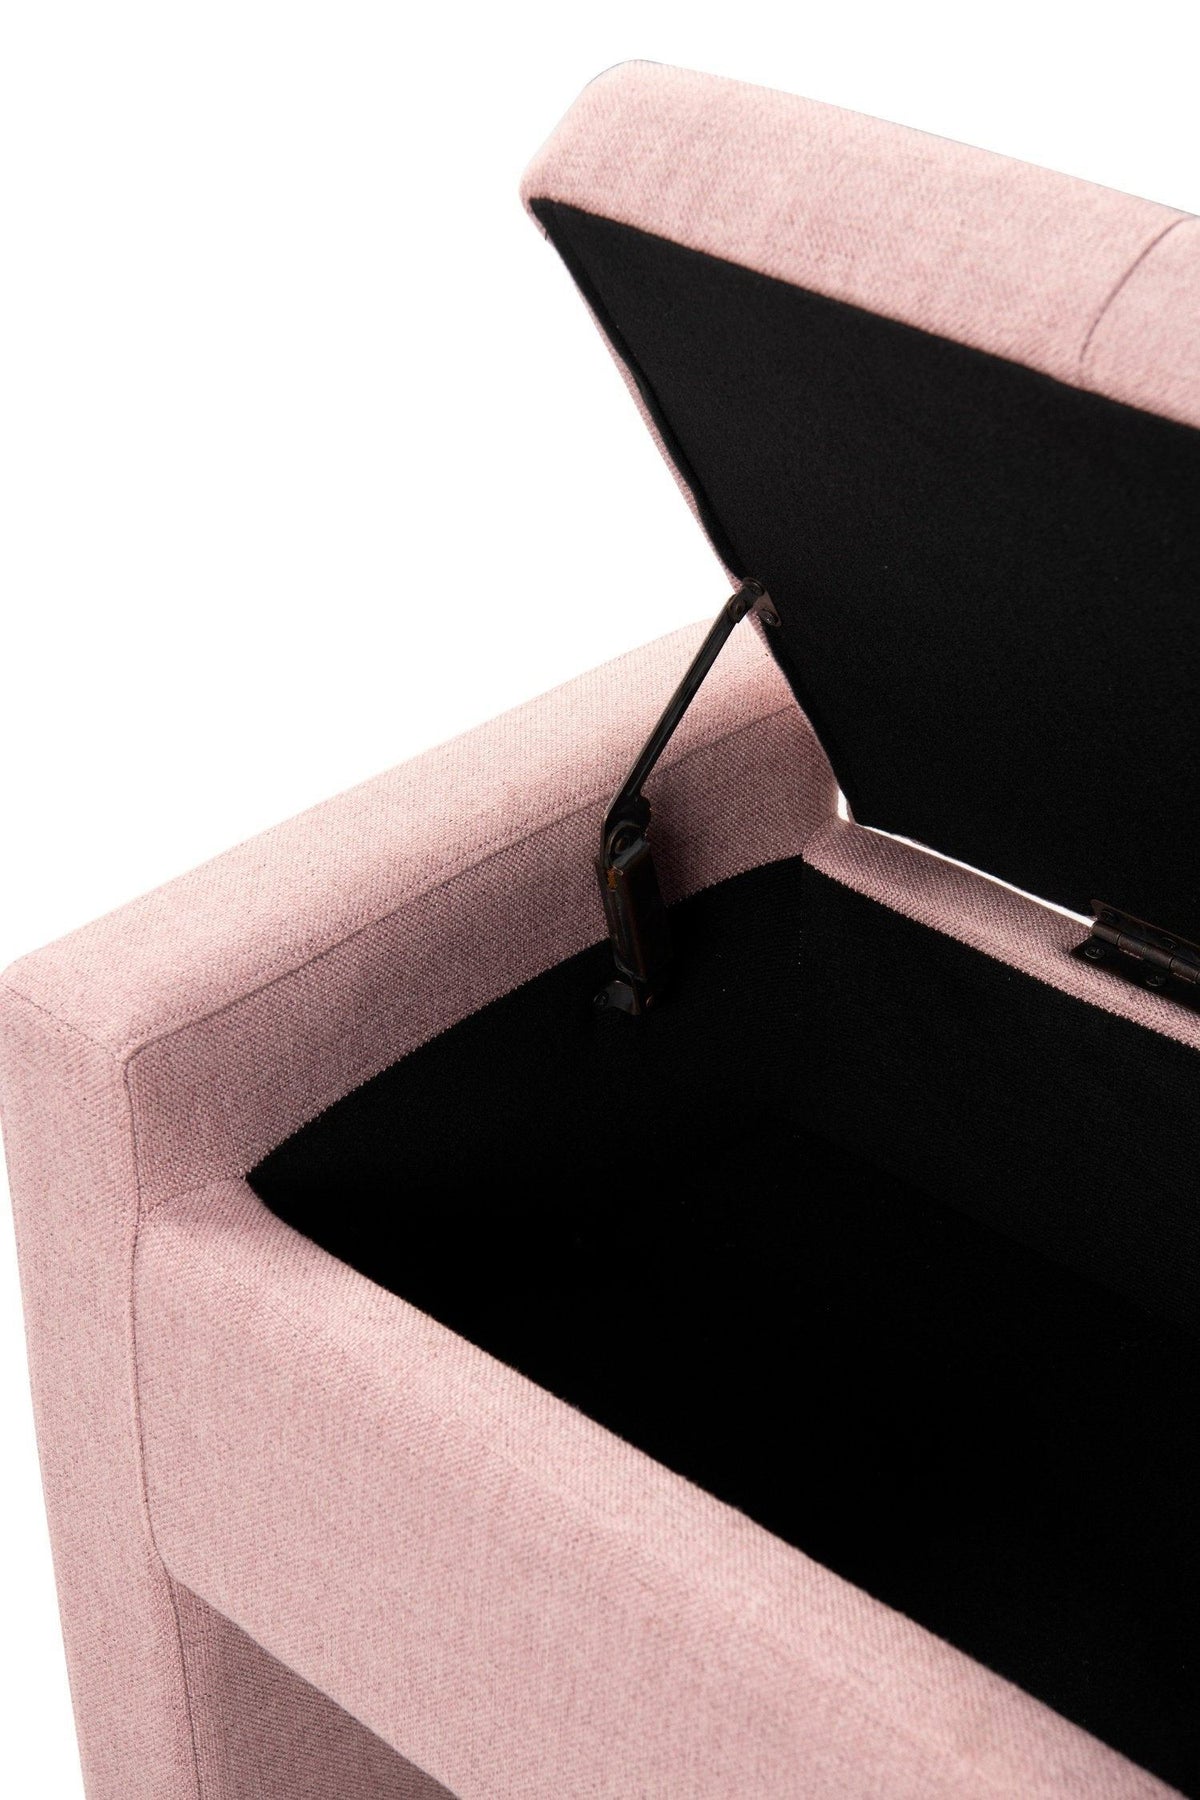 Iconic Home Kube Linen Textured Storage Bench 